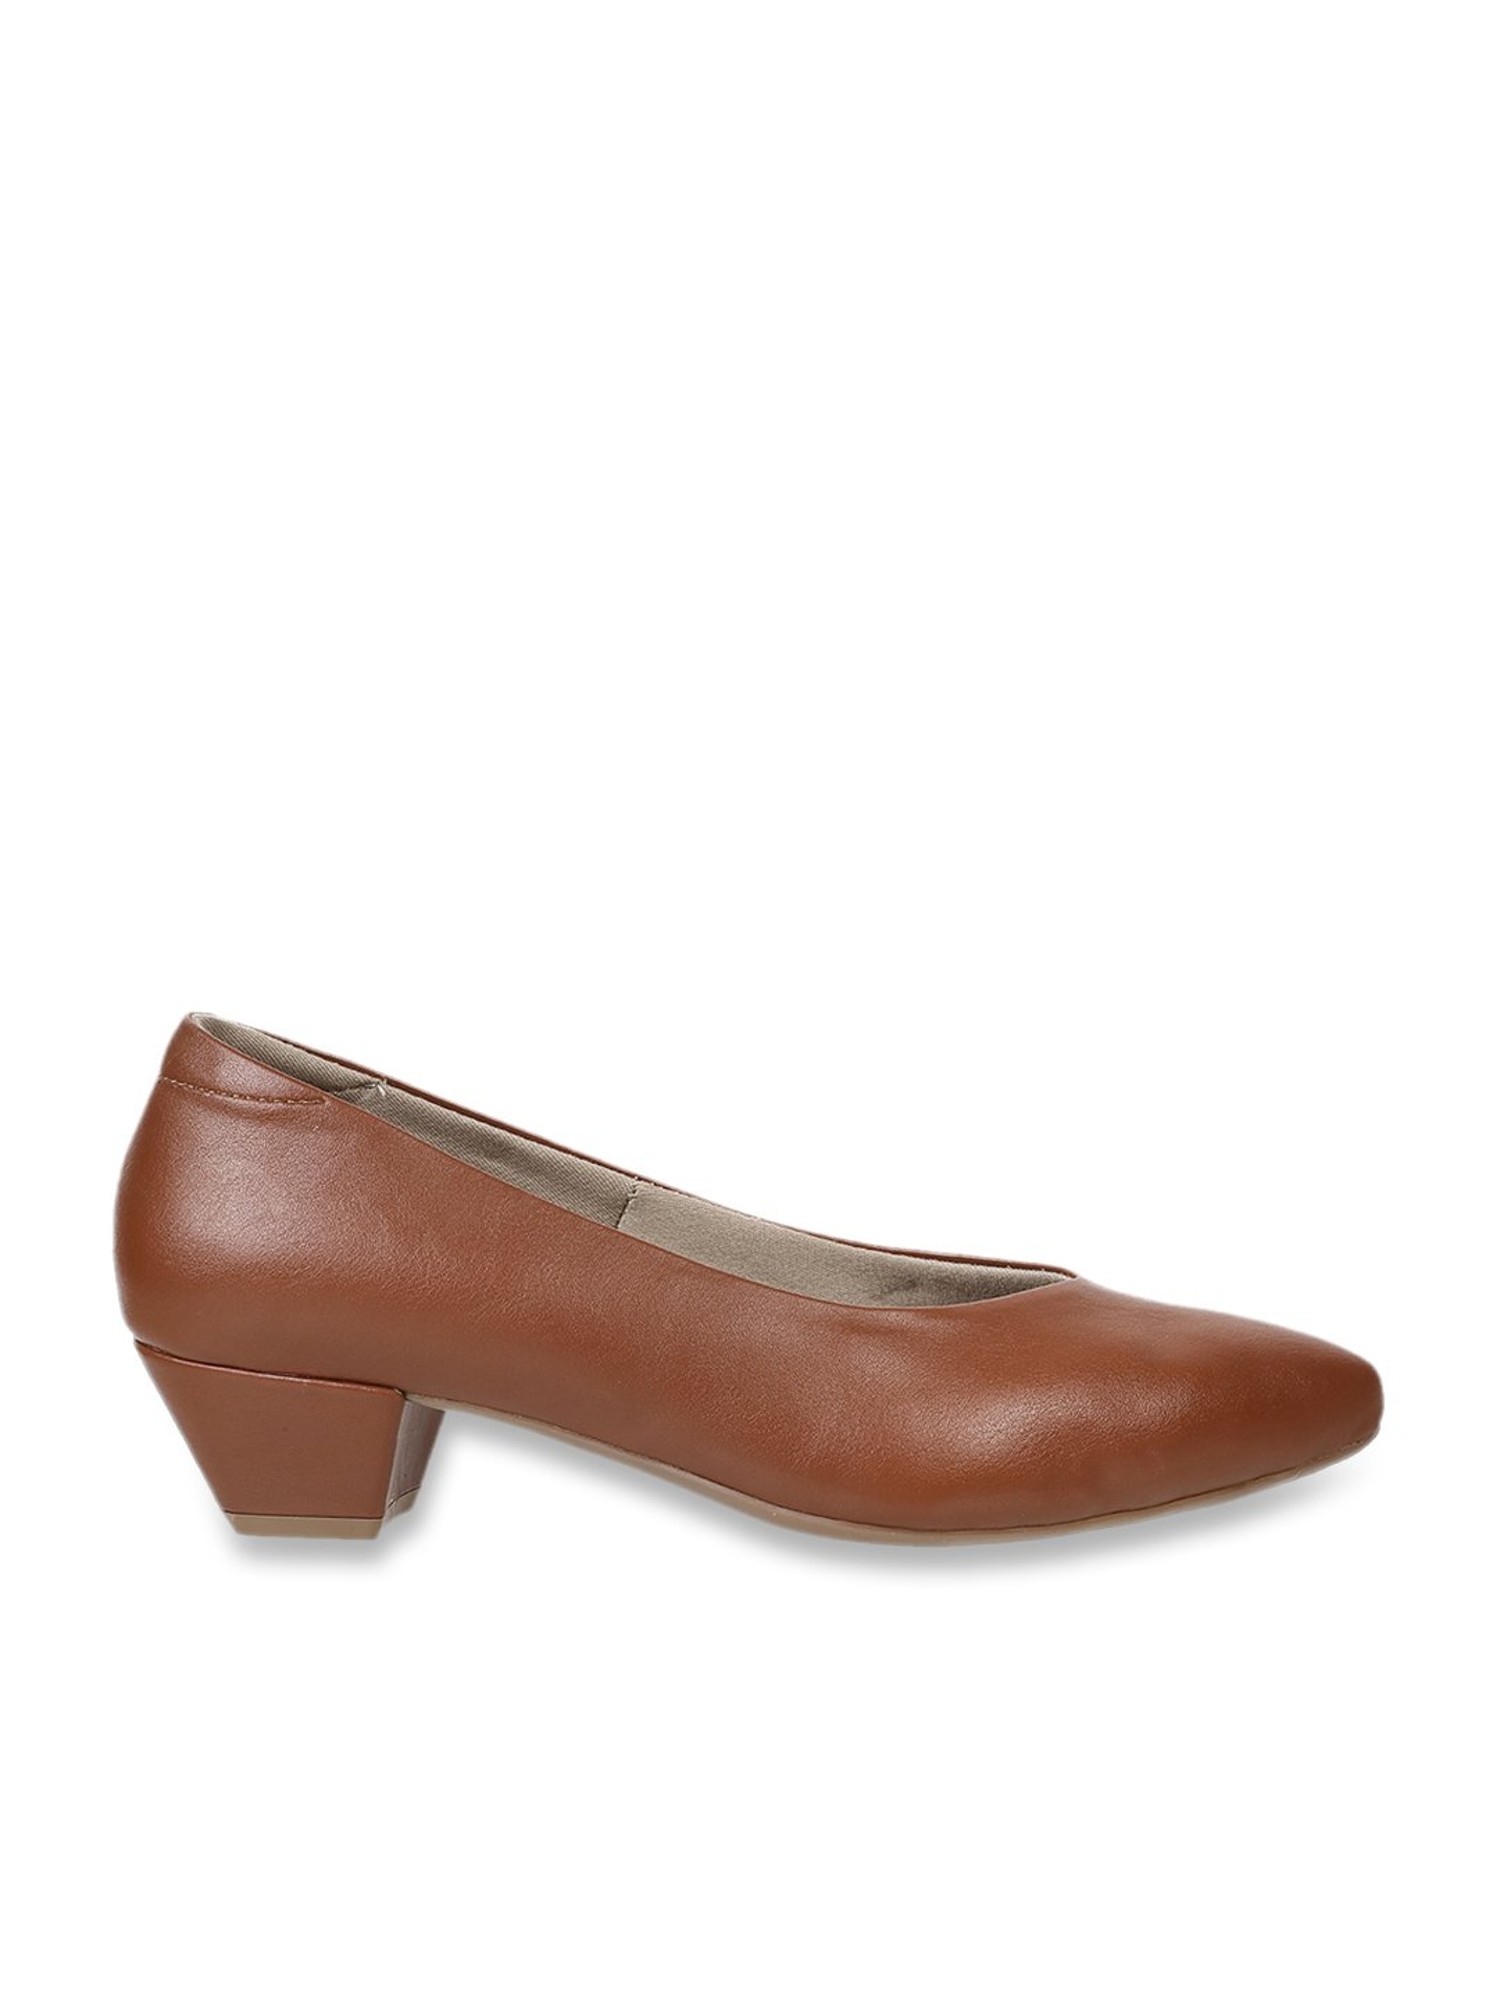 Giaro SHADY brown high heel platform shoes